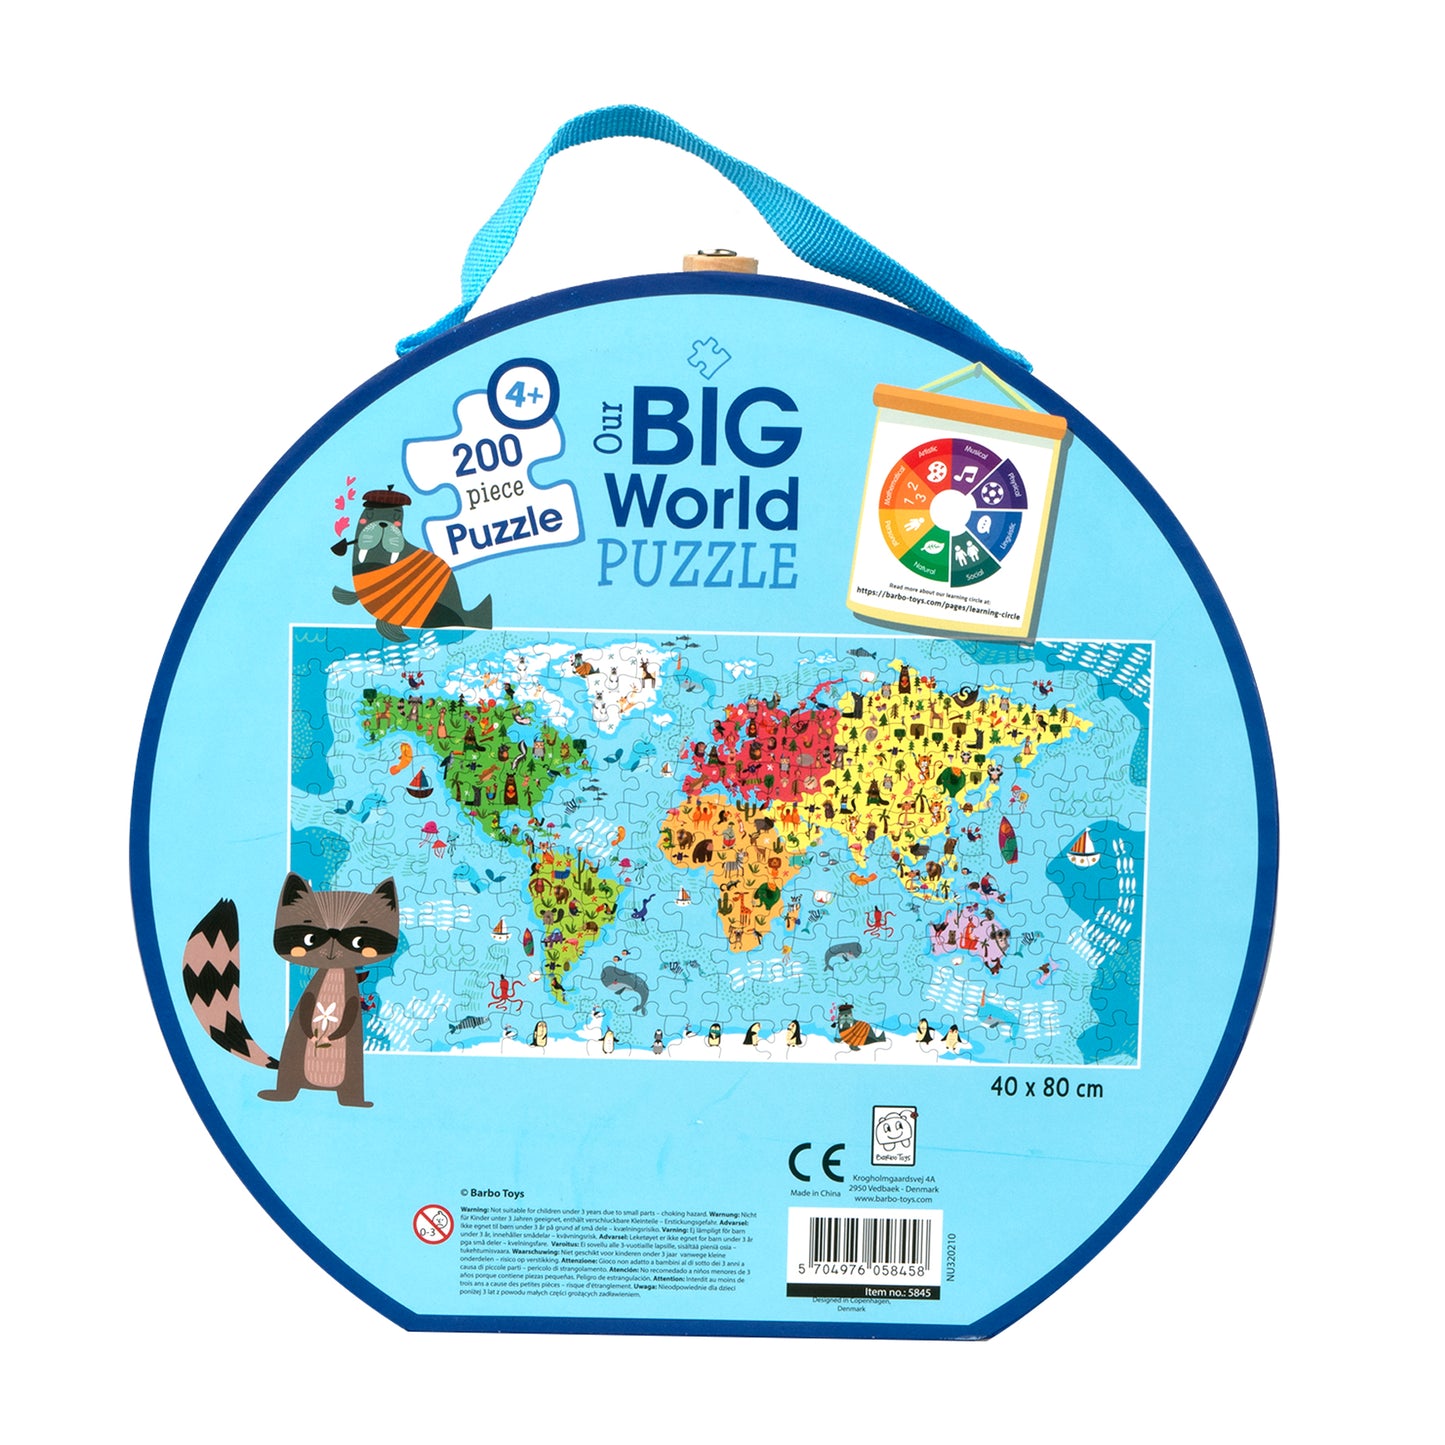 Our Big World Puzzle Suitcase